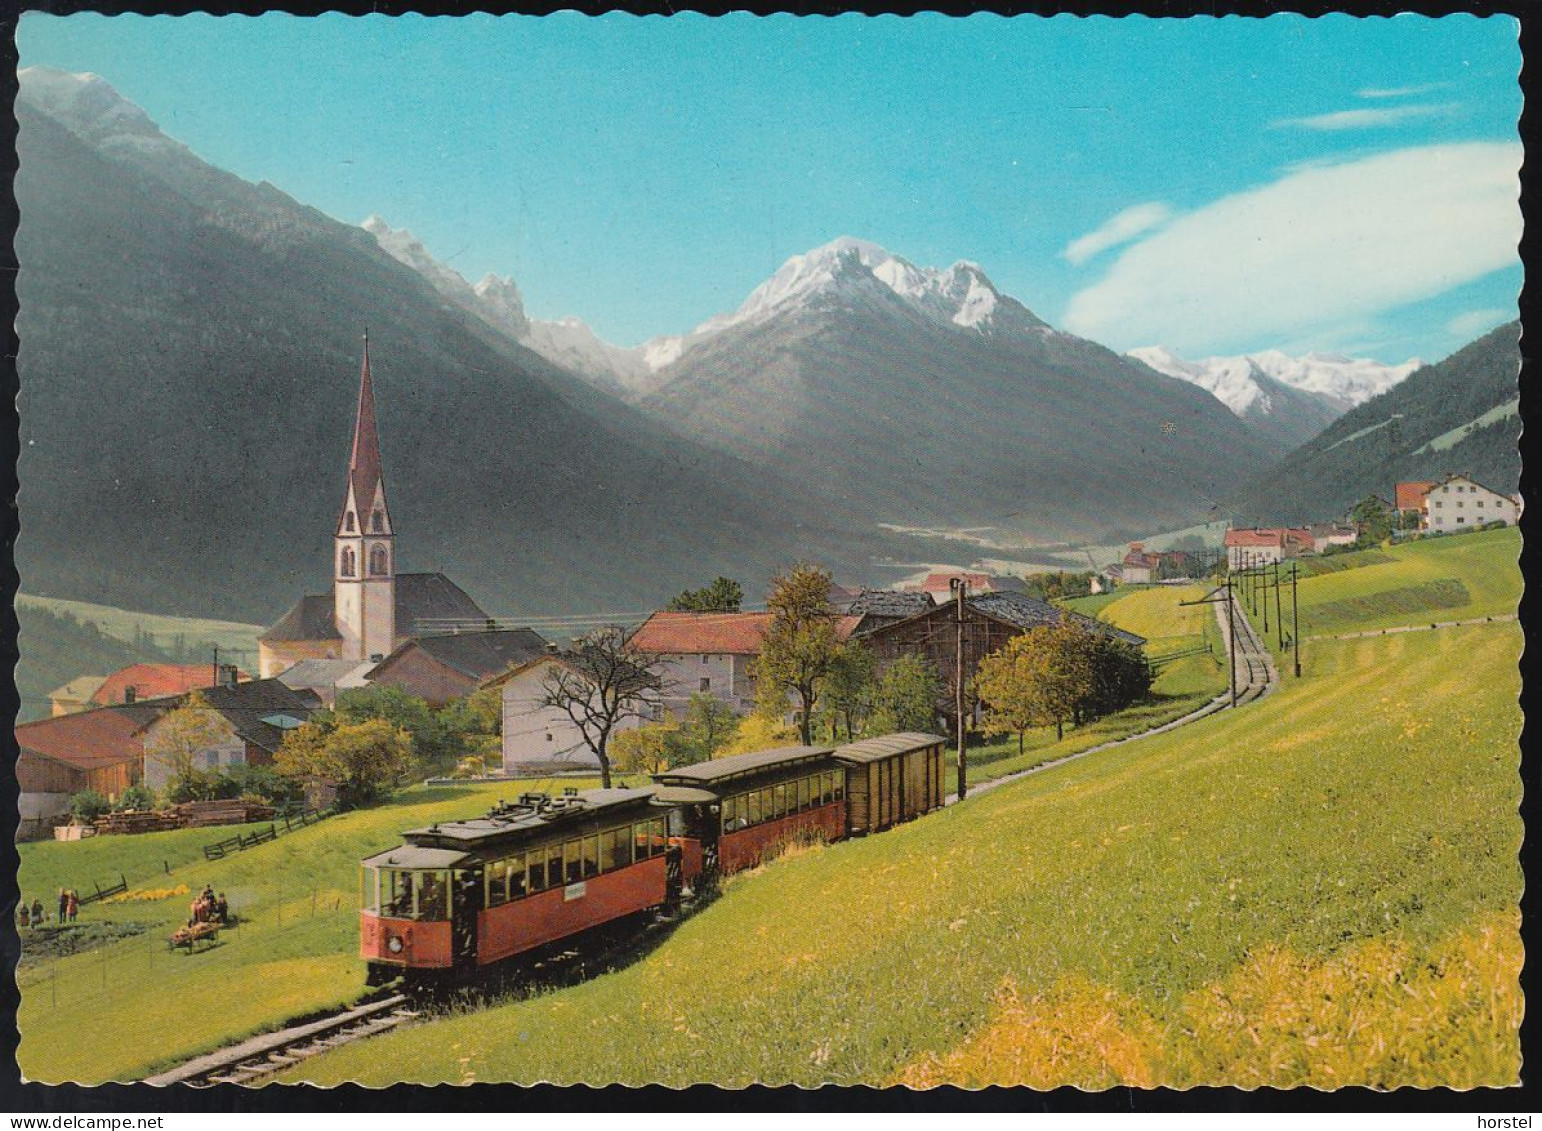 Austria - 6165 Telfes Im Stubai - Stubaitalbahn - Eisenbahn Mit Güterwagen - Train - Neustift Im Stubaital